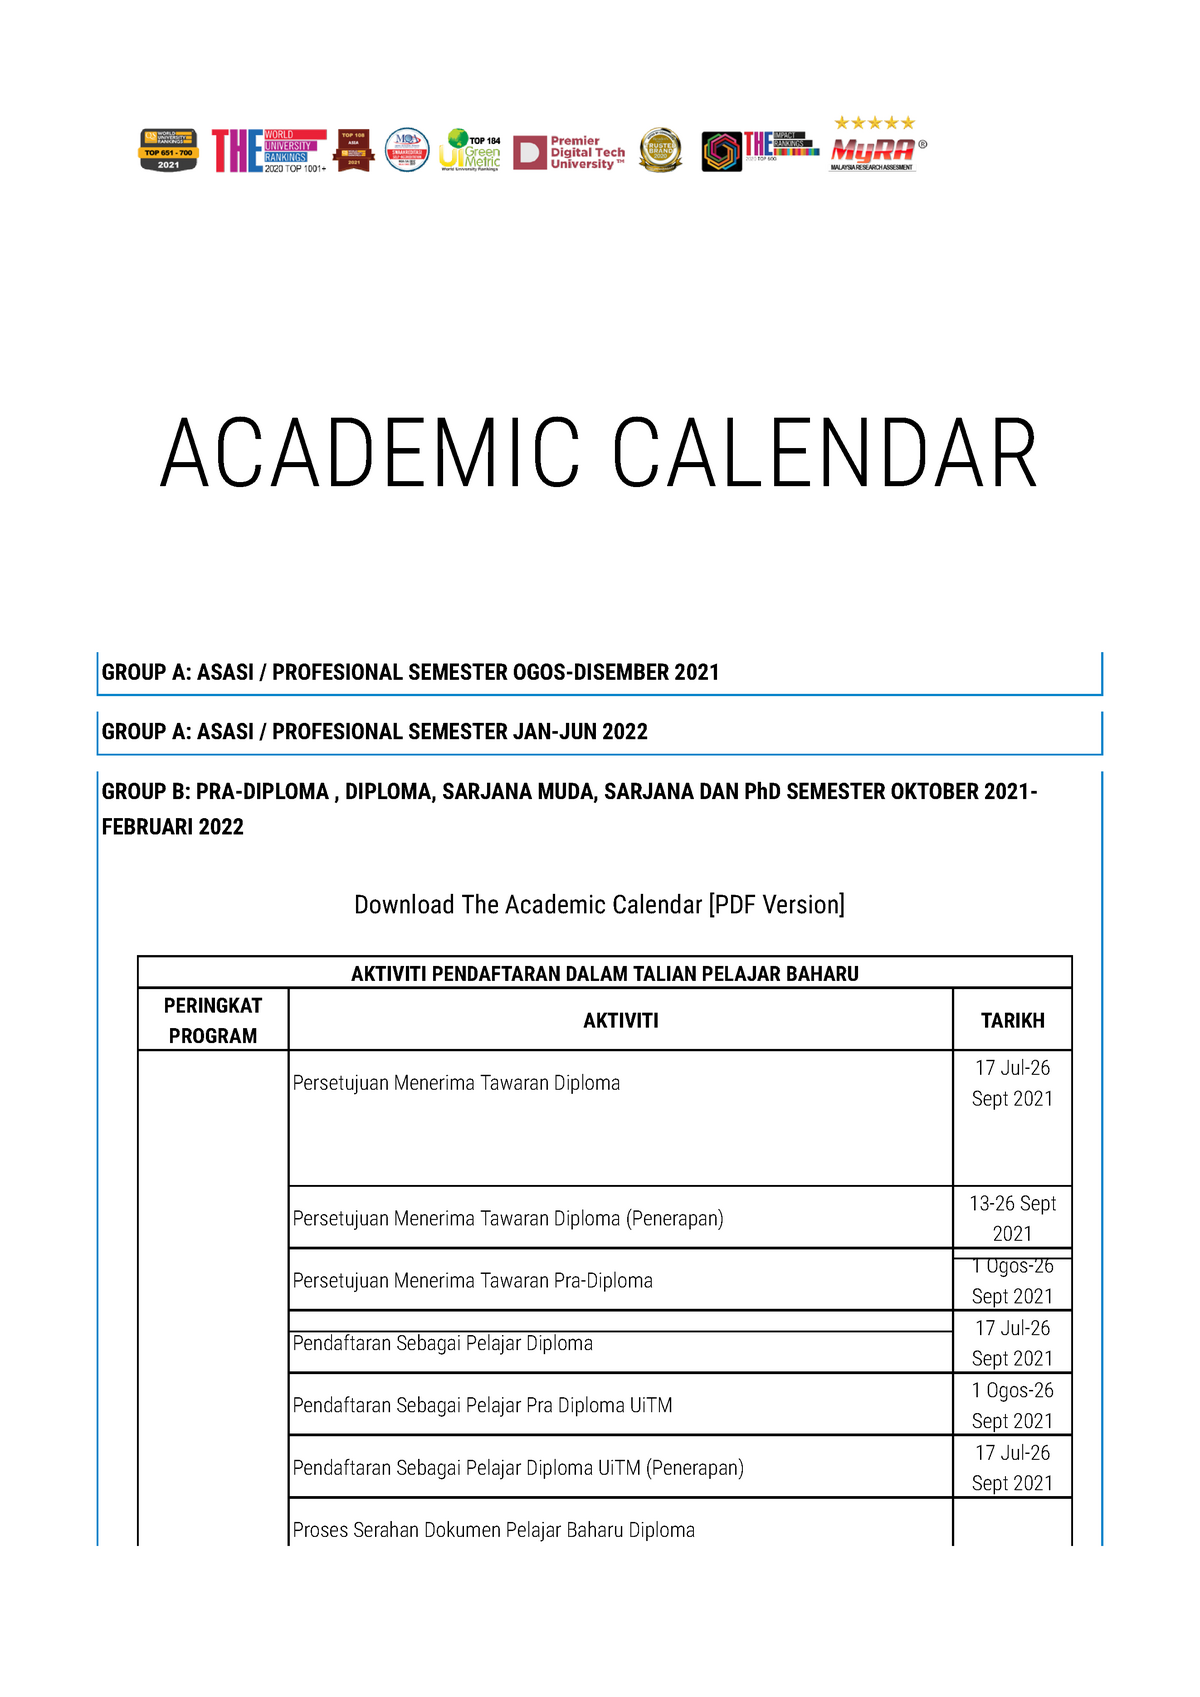 Academic Calendar for uitm malaysia ACADEMIC CALENDAR AKTIVITI